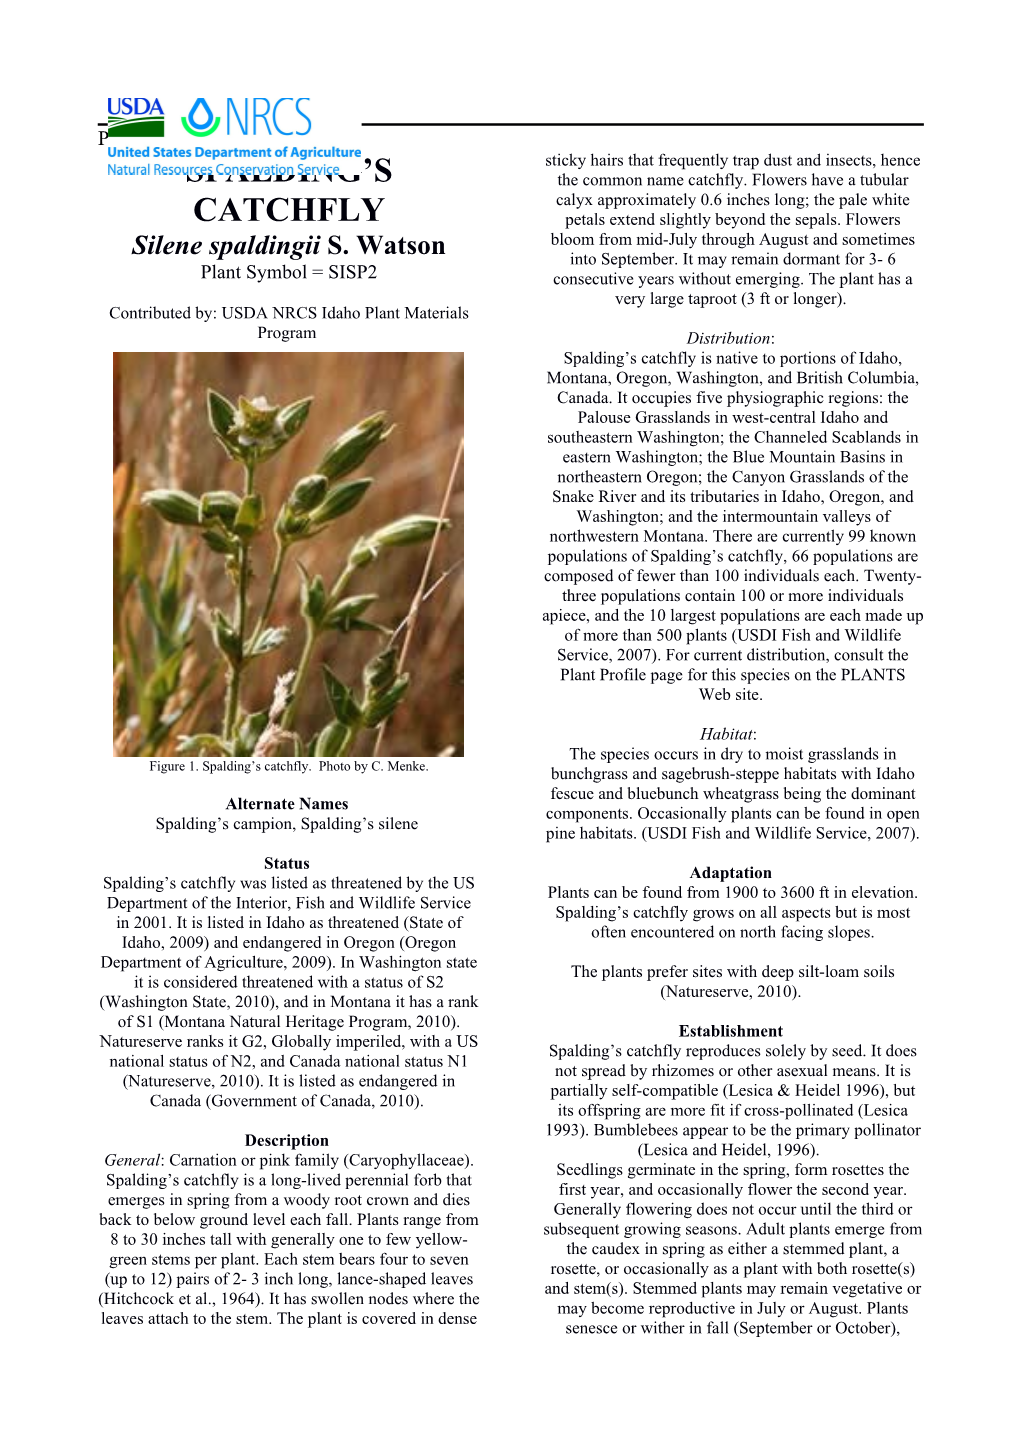 Spalding's Catchfly (Silene Spaldingii) Plant Guide